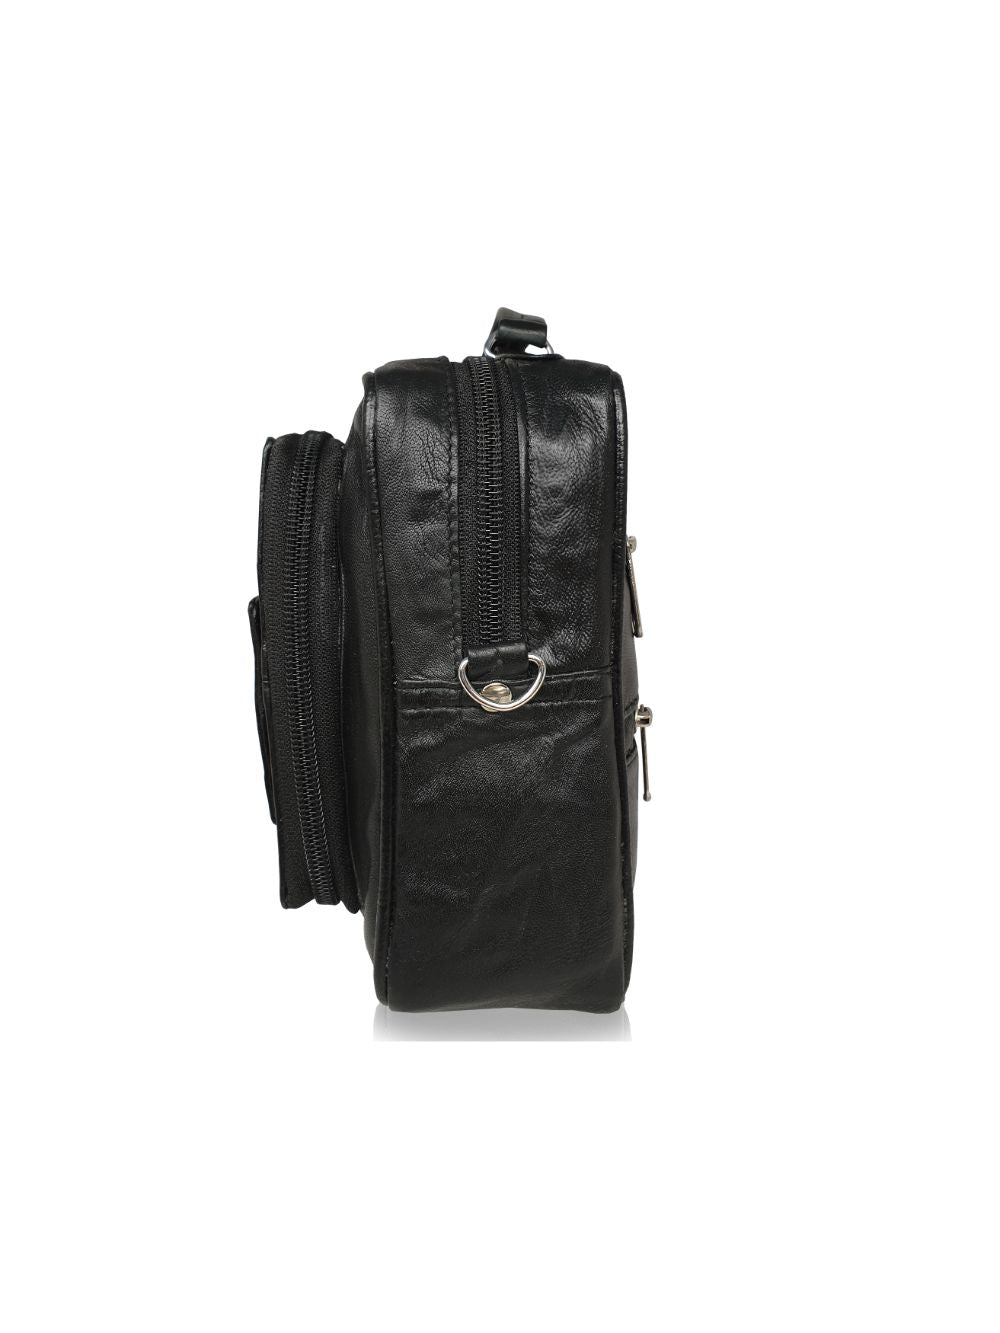 Roamlite Travel Orginizer bag Black Leather RL521 side